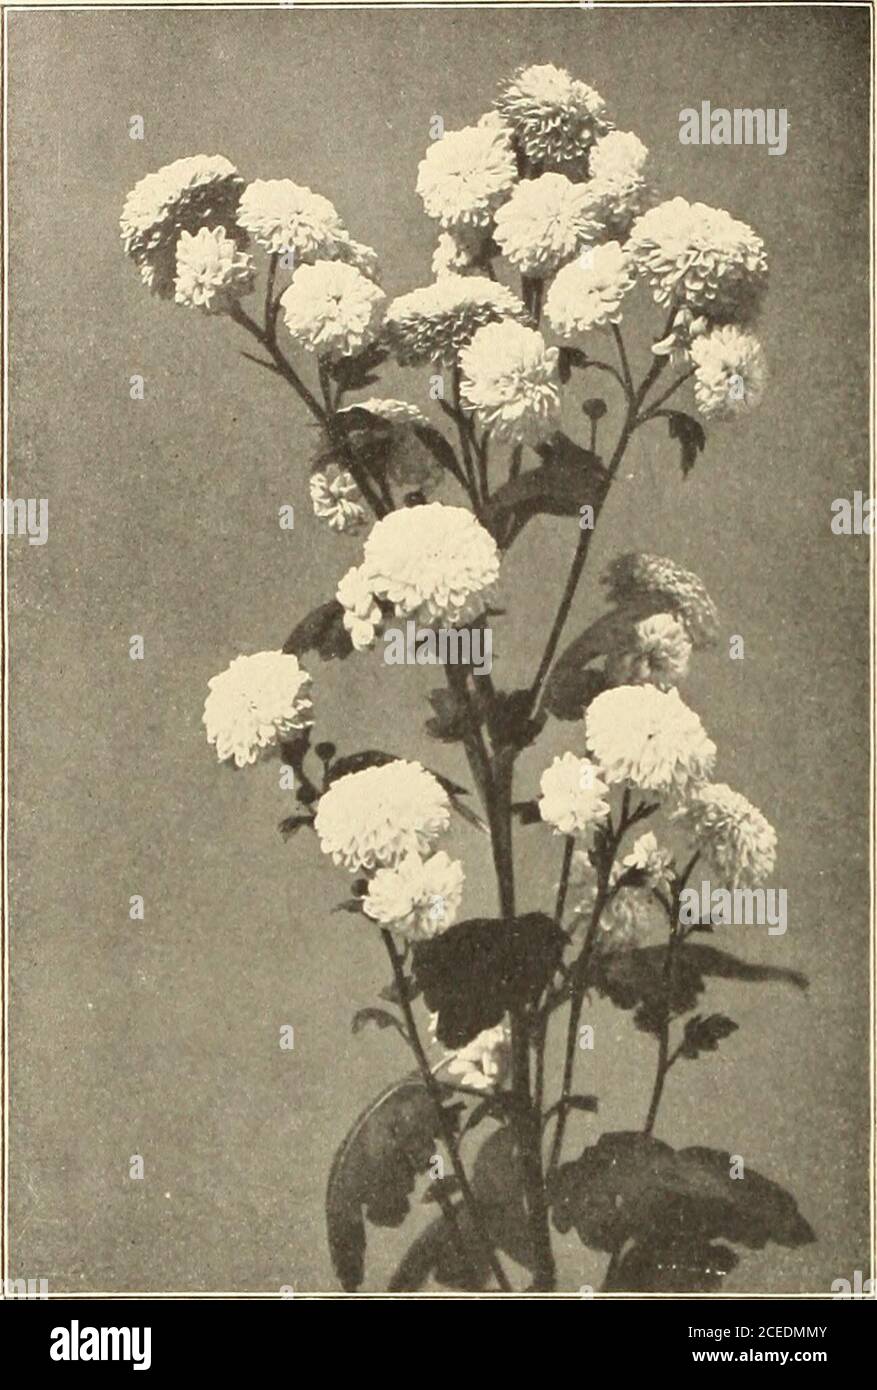 . Farquhar's midsummer catalogue : 1911. iTS.-Continued. Per Doz.. Hardy Chrysanthemum. Per Doz. Coreopsis Laneeolata 1.50 Daphne Cneorum Each, ..5U 5.00 Delphinium. FarquhaFs Hybrids. Larkspur . 2.00 Delphinium Chinensis, Blue 1.50 Delphinium Chinensis Alba 1.50 Delphinium Fopmosum 1.50 Delphinium Formosum CcBlestinum 1.50 Delphinium Sibiricum 1.50 Dianthus Diadematis. Diadem Pink 1.00 Dietamnus Fraxinella. Gas Plant 1.50 Dielytra Speetabilis. Bleeding heart 1,50 Erig-eron Bellidifolus 2.50 Erigeron Speeiosus 1.50 Eupatopium Fpasepi 1.50 Funkia Subeordata Gpandiflopa. Giant Day Lily 1.50 Funk Stock Photo